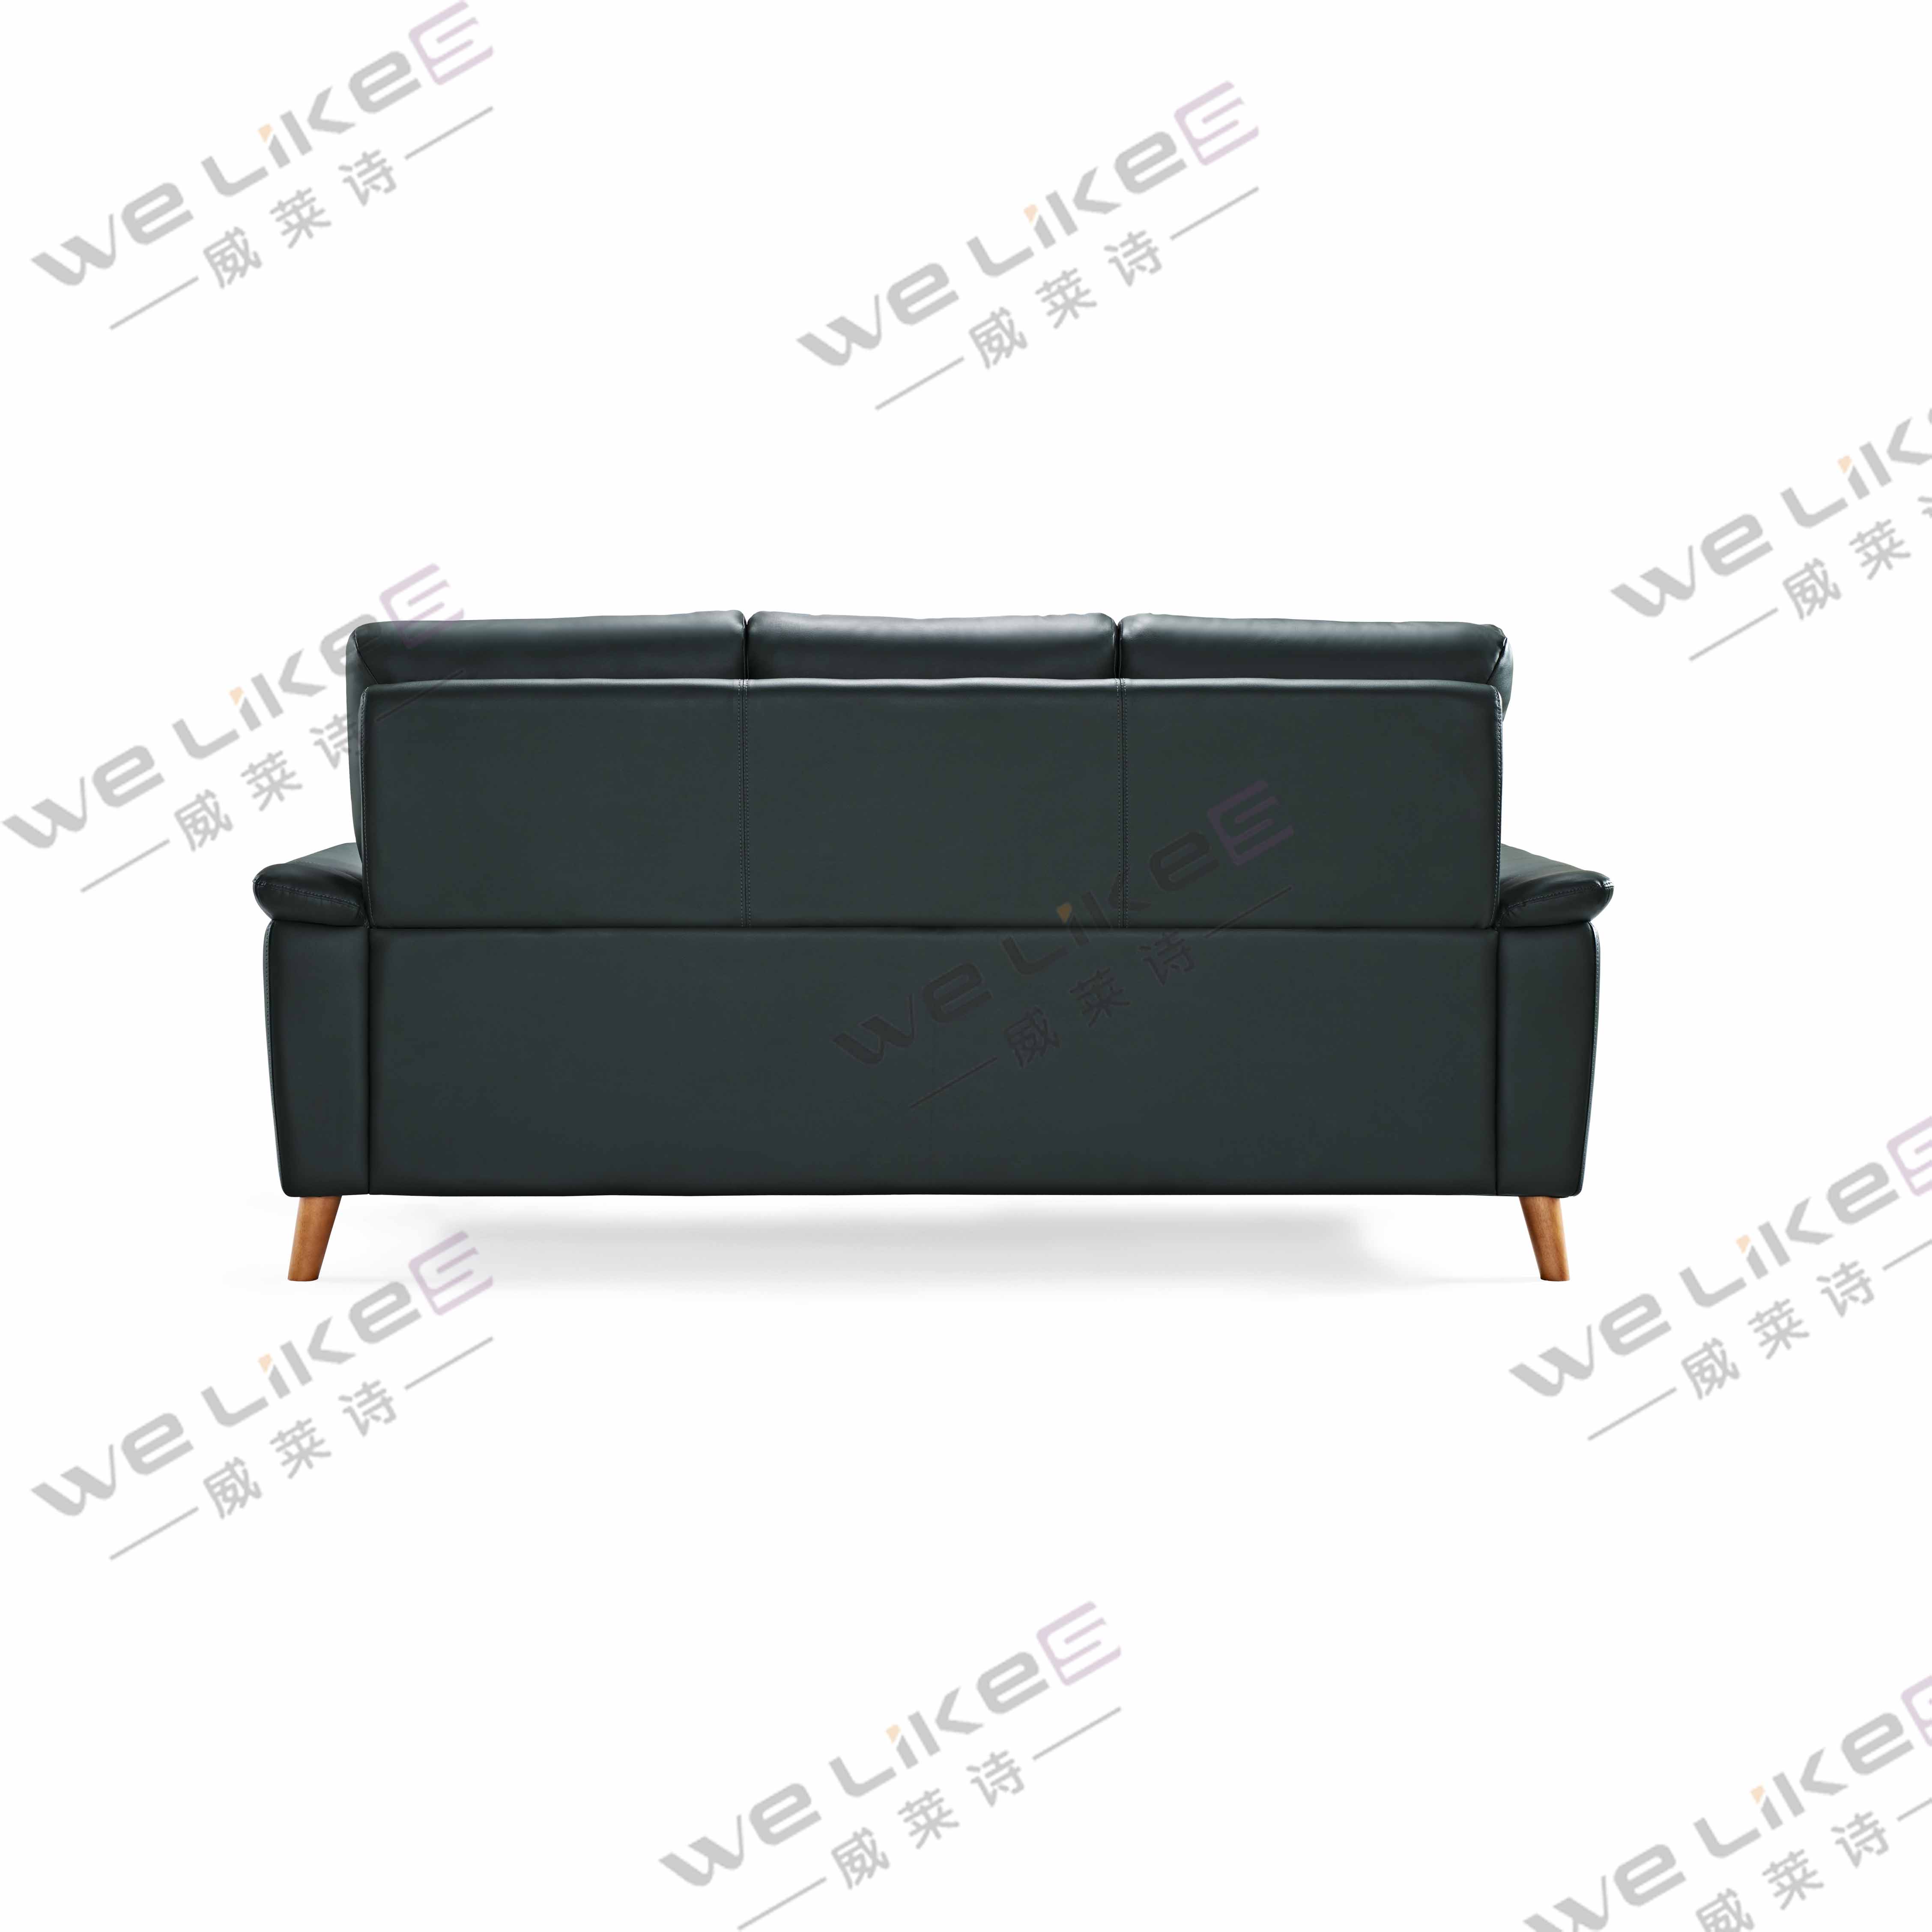 Leather Sofa-Welikes ZM851